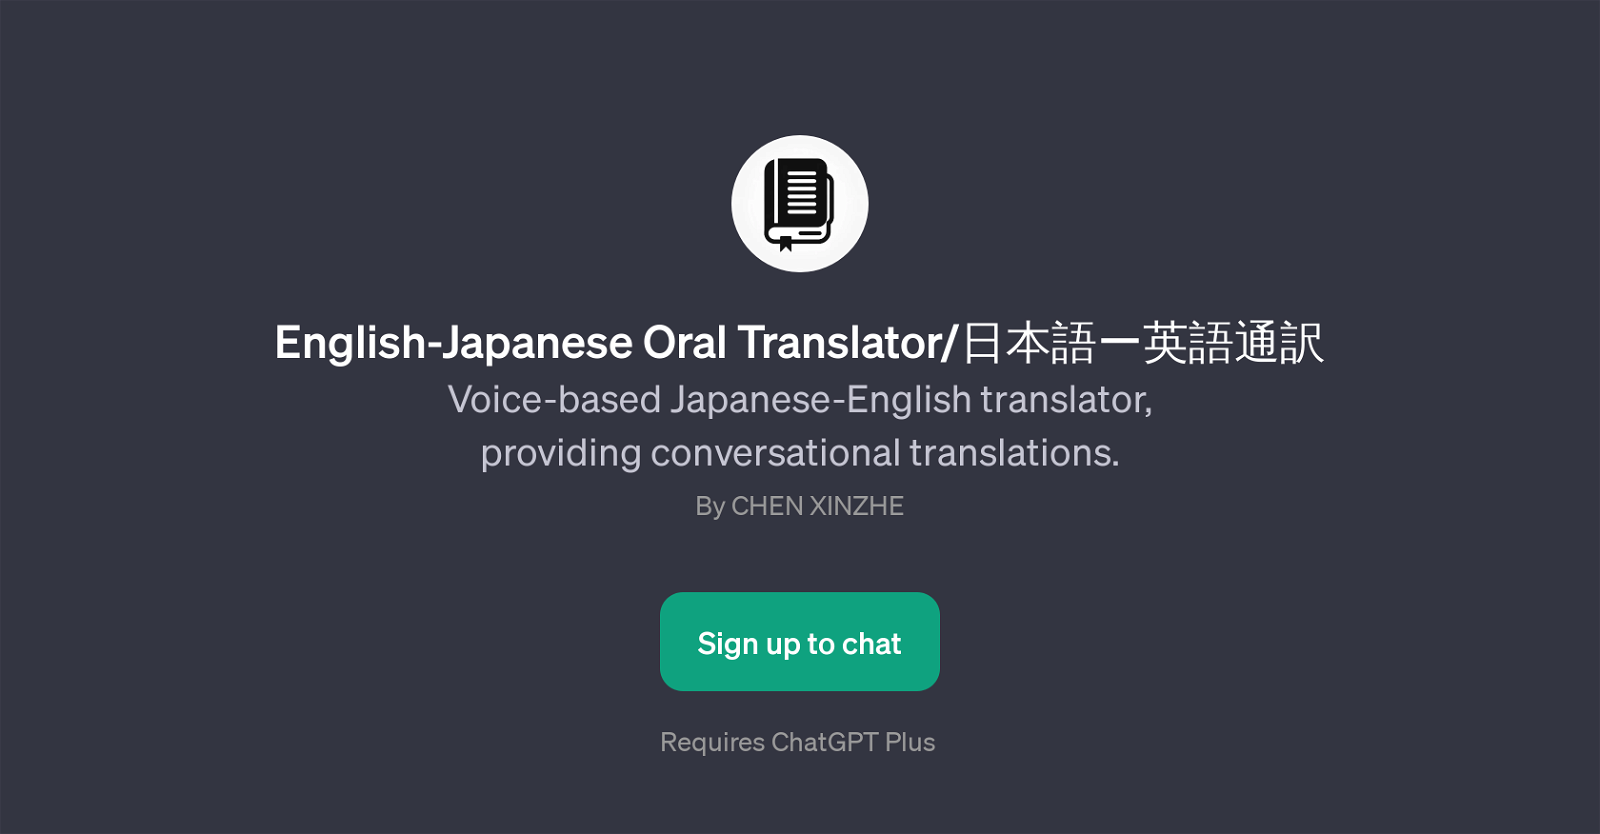 English-Japanese Oral Translator website